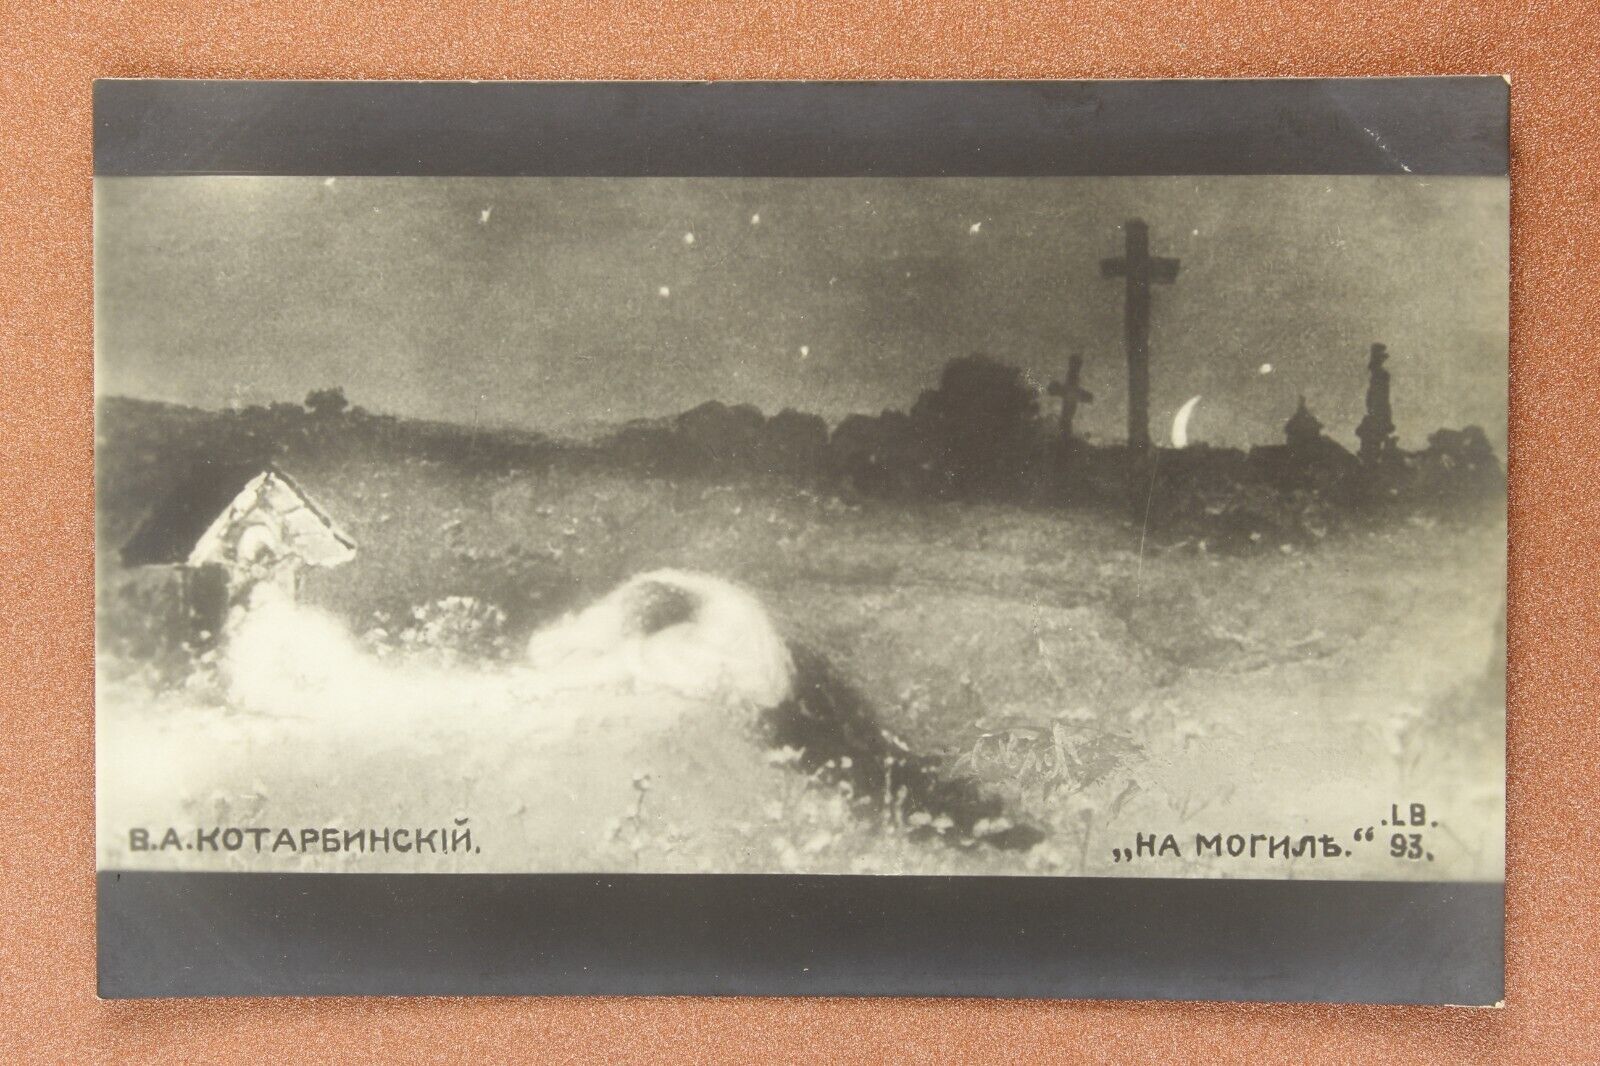 Ukraine cemetery Night on grave tears. Tsarist Russia postcard 1909s KOTARBINSKY